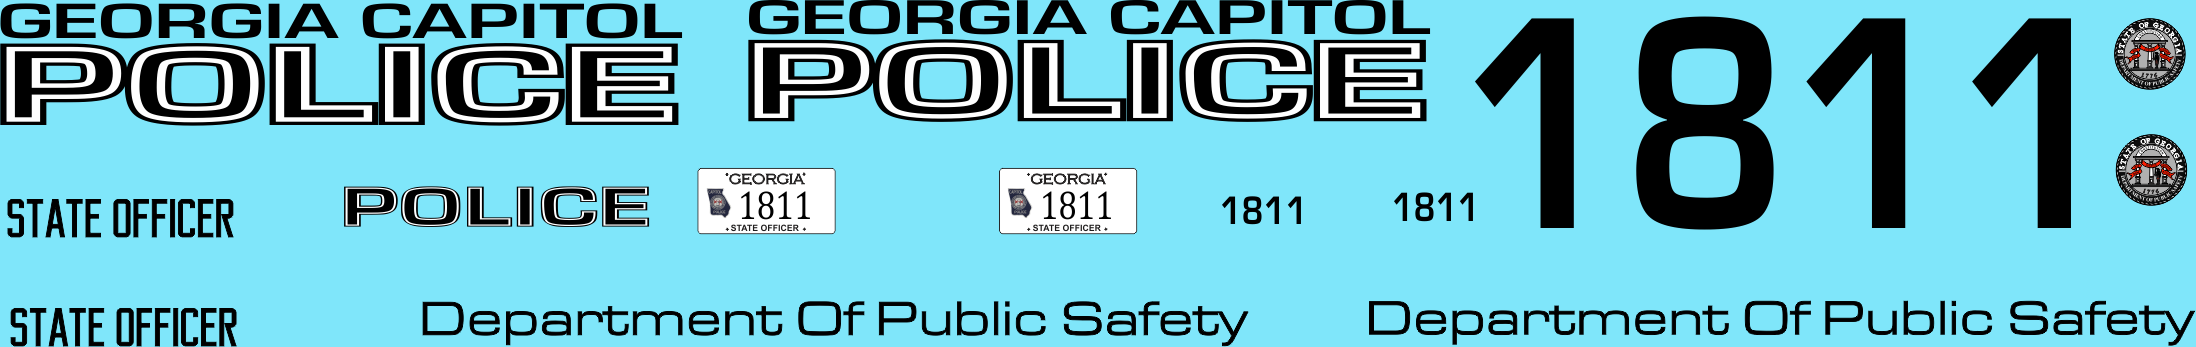 1/24-1/25 Georgia Capitol Police waterslide decals